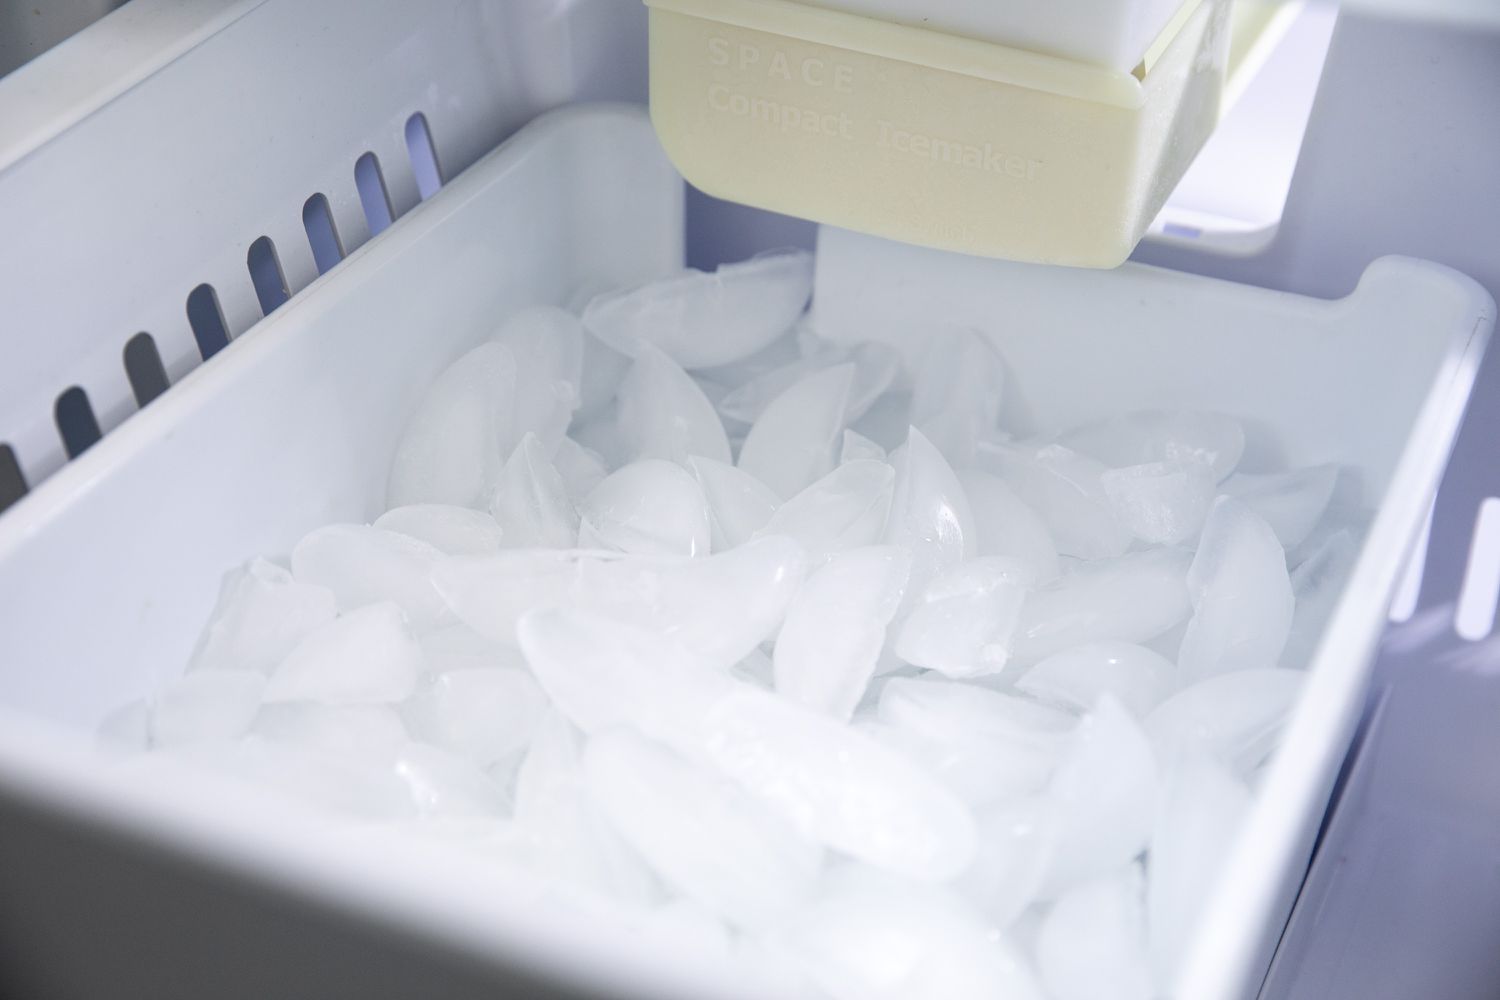 Recipiente da máquina de fazer gelo cheio de cubos de gelo